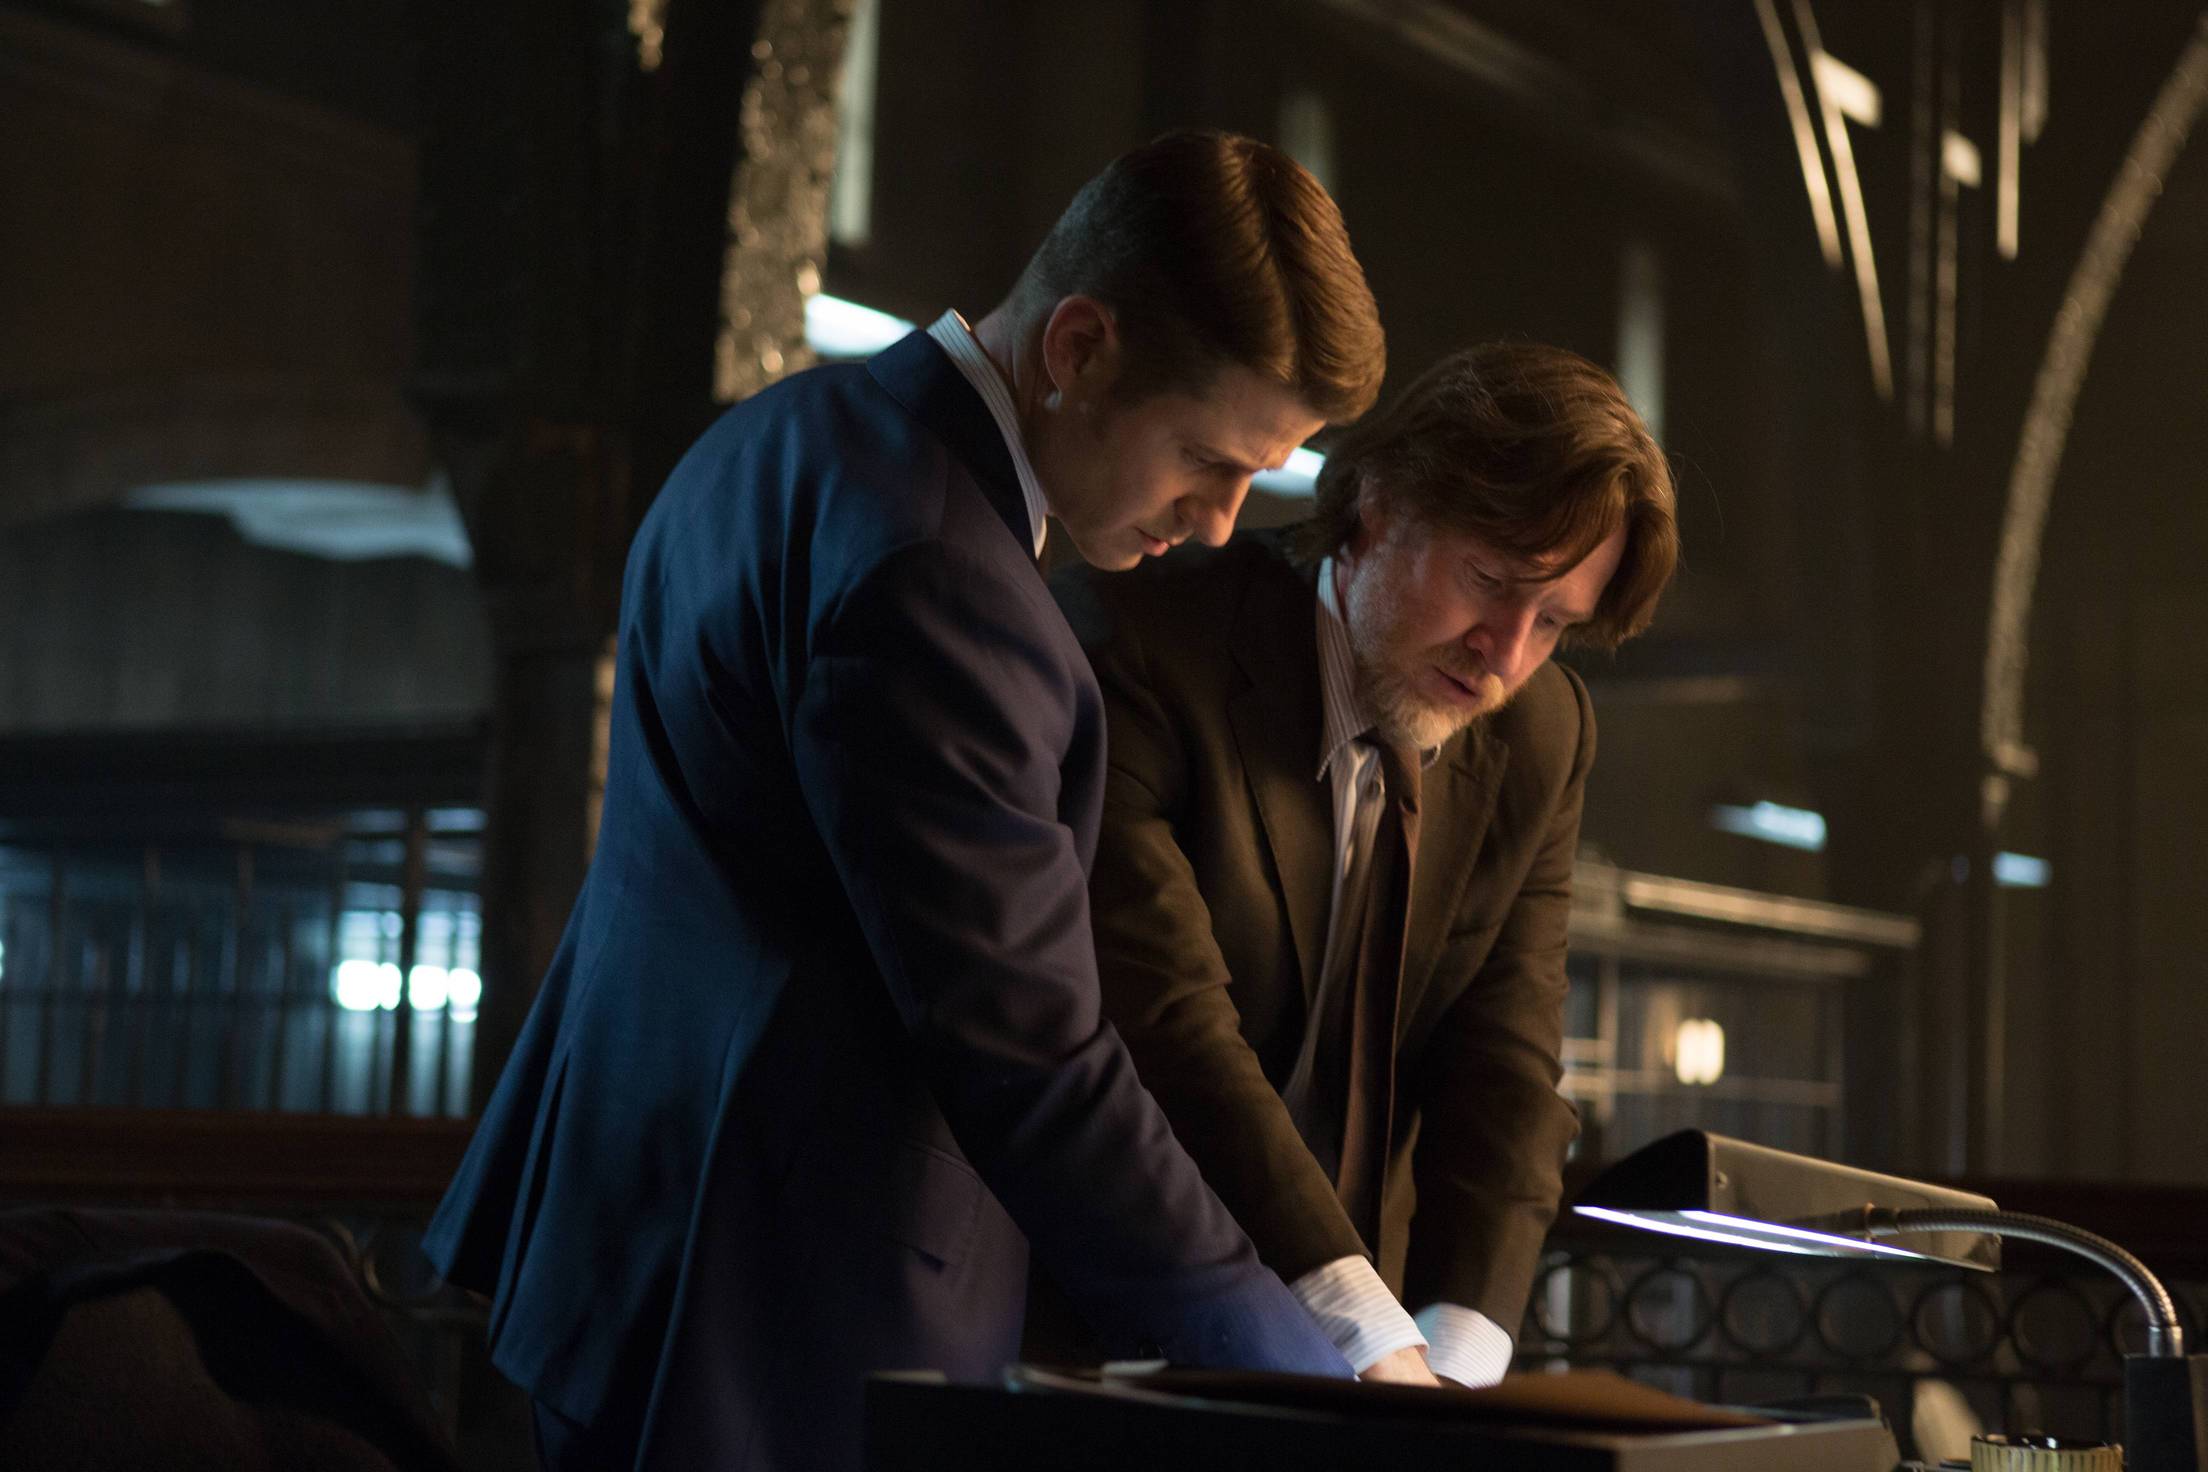 Still of Donal Logue and Ben McKenzie in Gotham (2014)